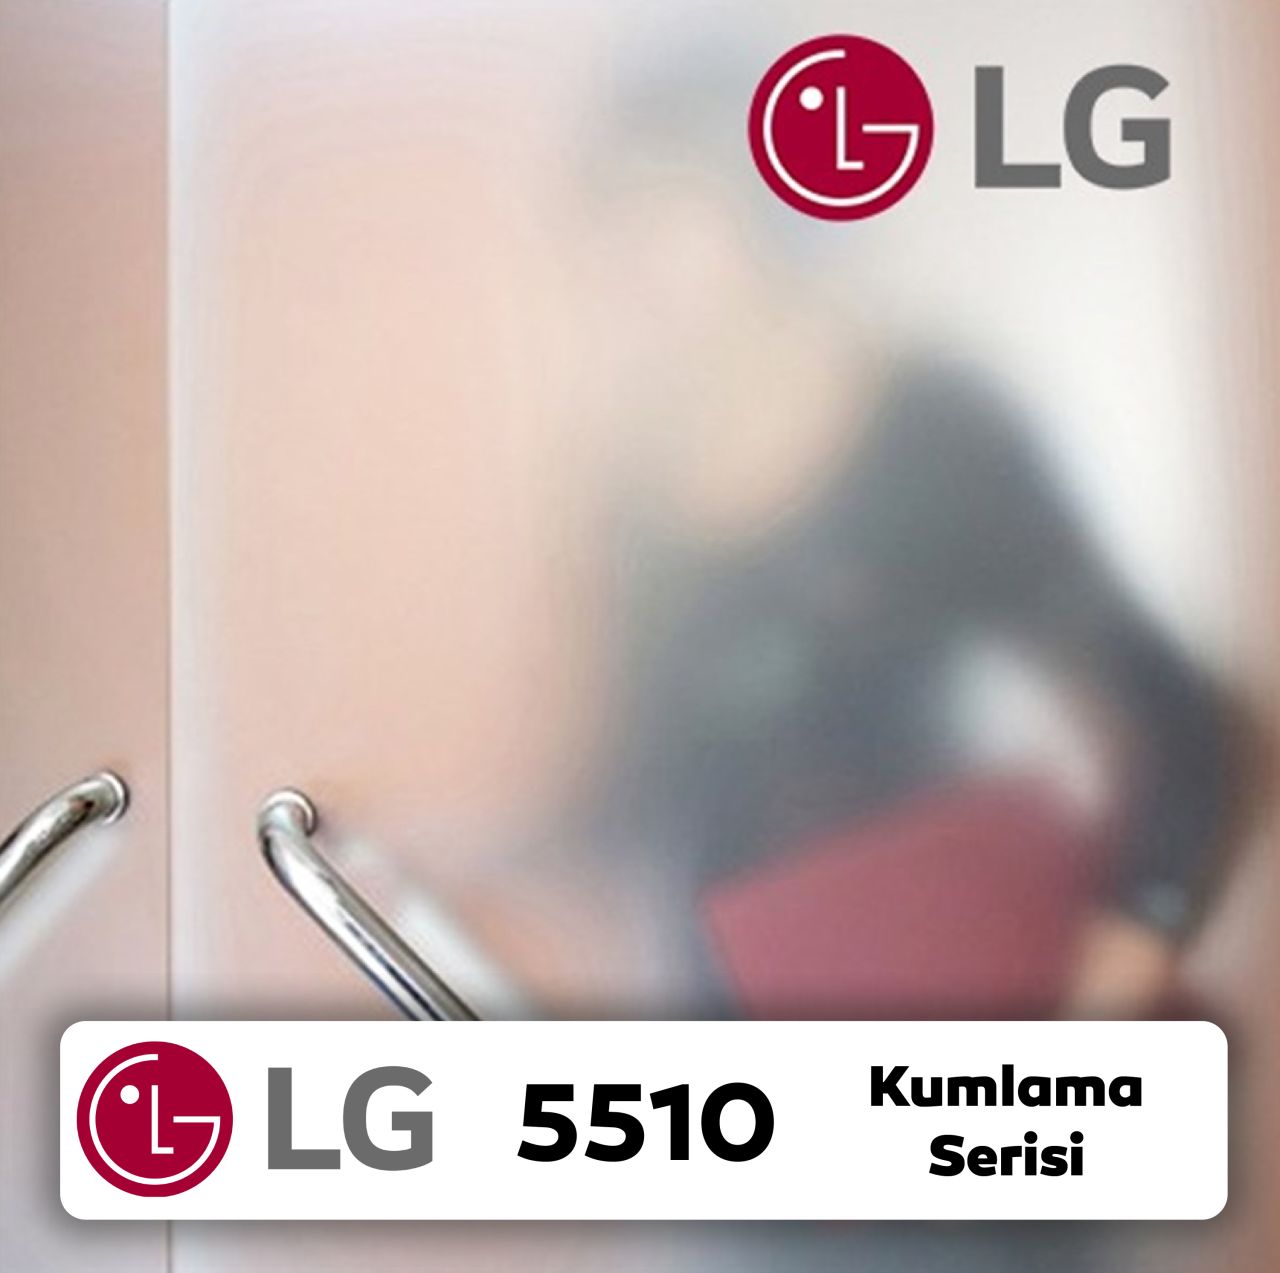 LG 5510 Kumlama Serisi